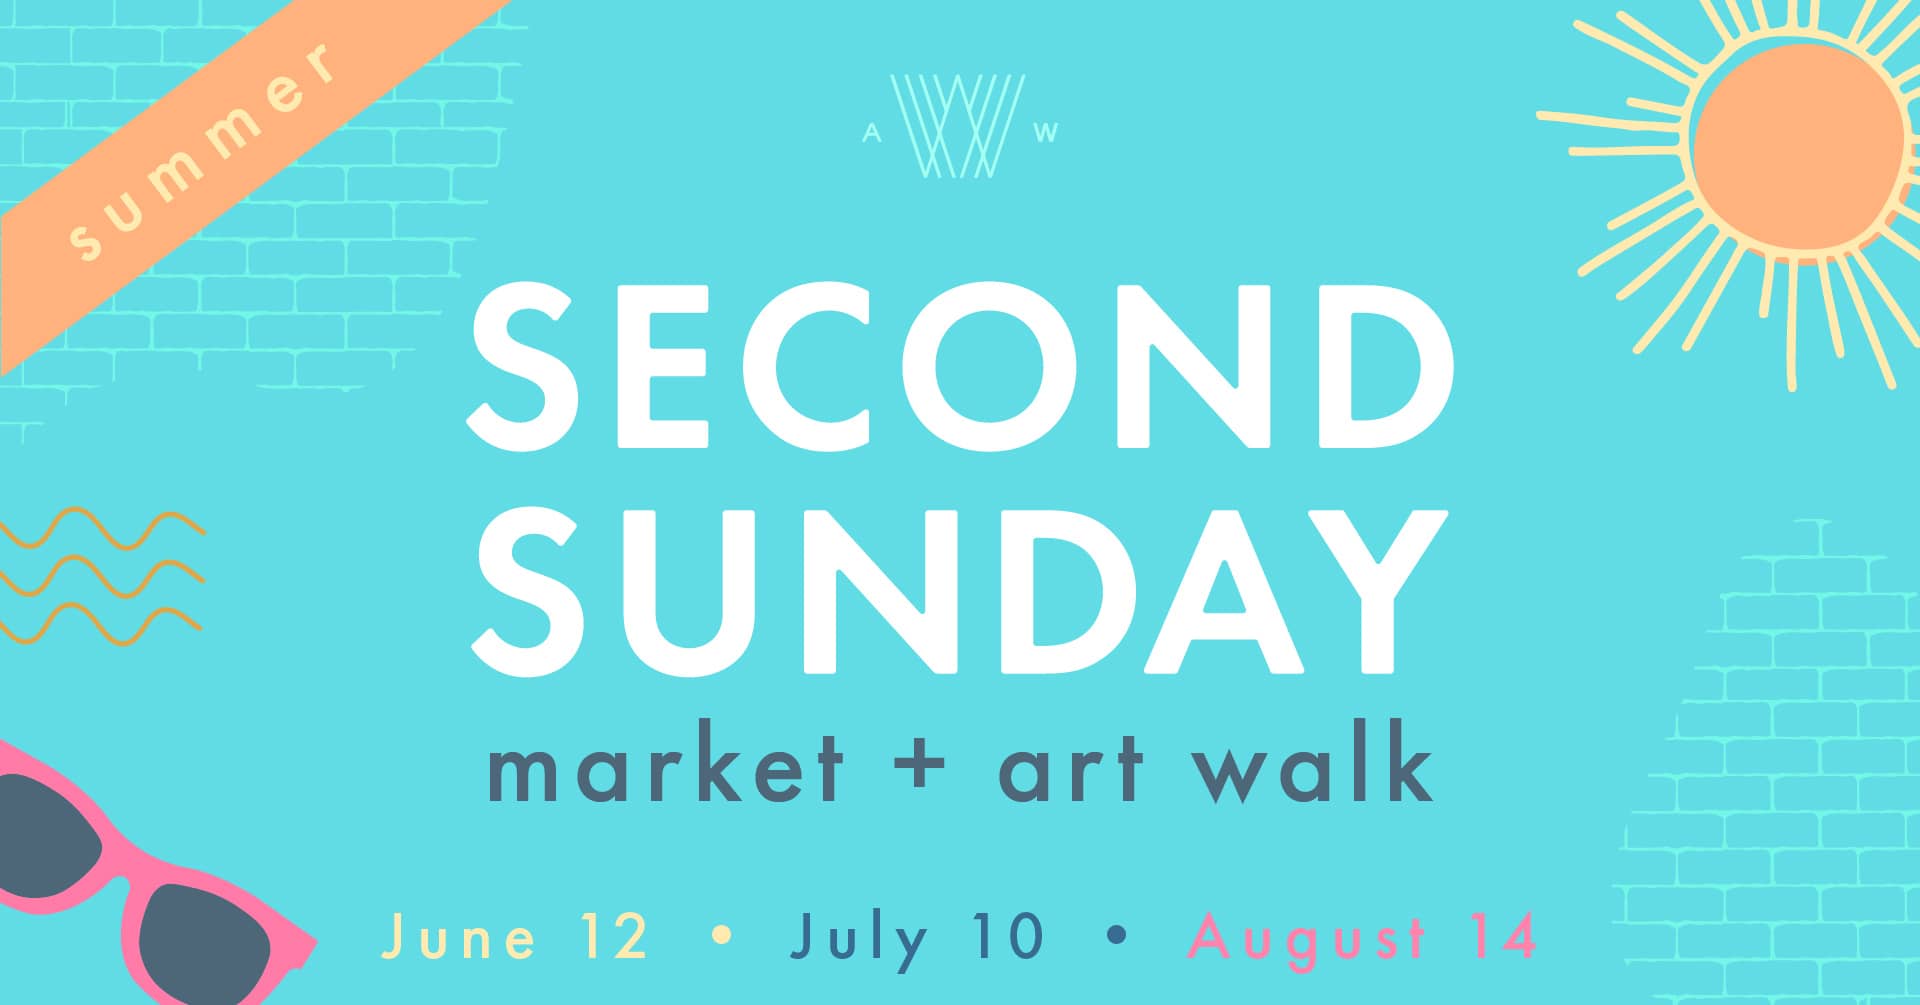 Second Sunday Market + Art Walk